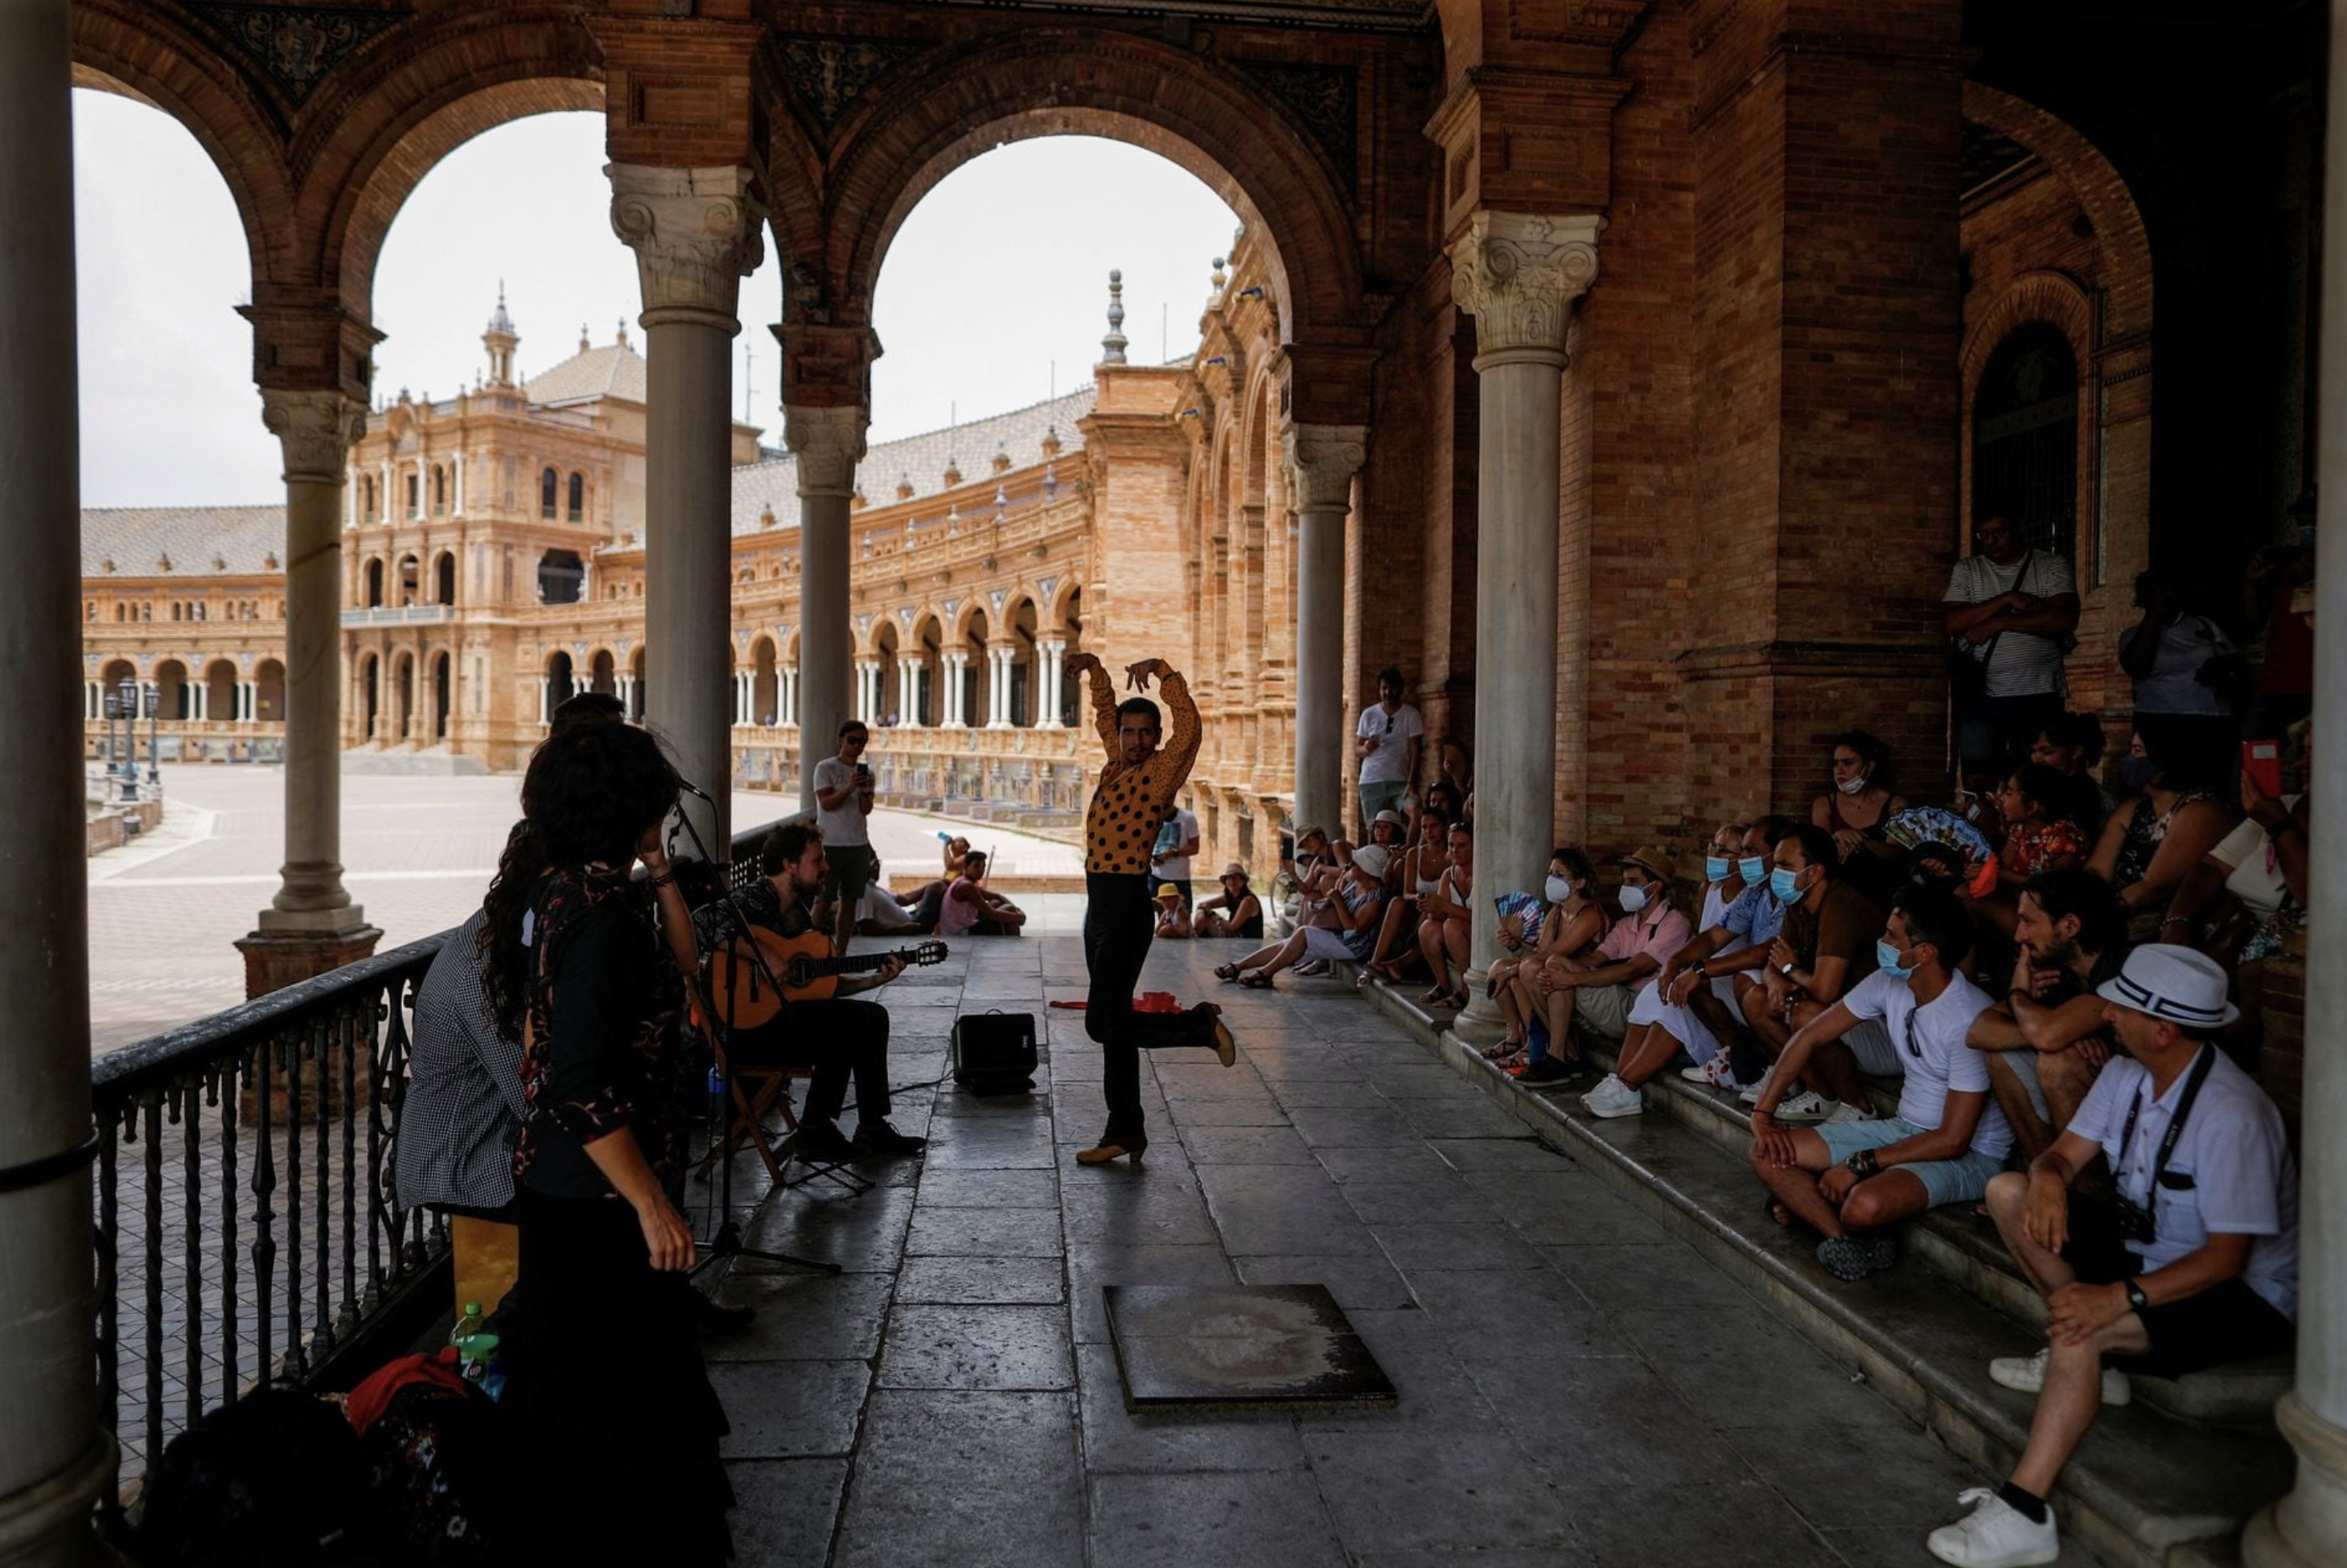 A flamenco artist dances for tourists at the Plaza de Espana (Spain square), as a heatwave hits Spain, in Seville, southern Spain, August 13, 2021. Photo: Reuters